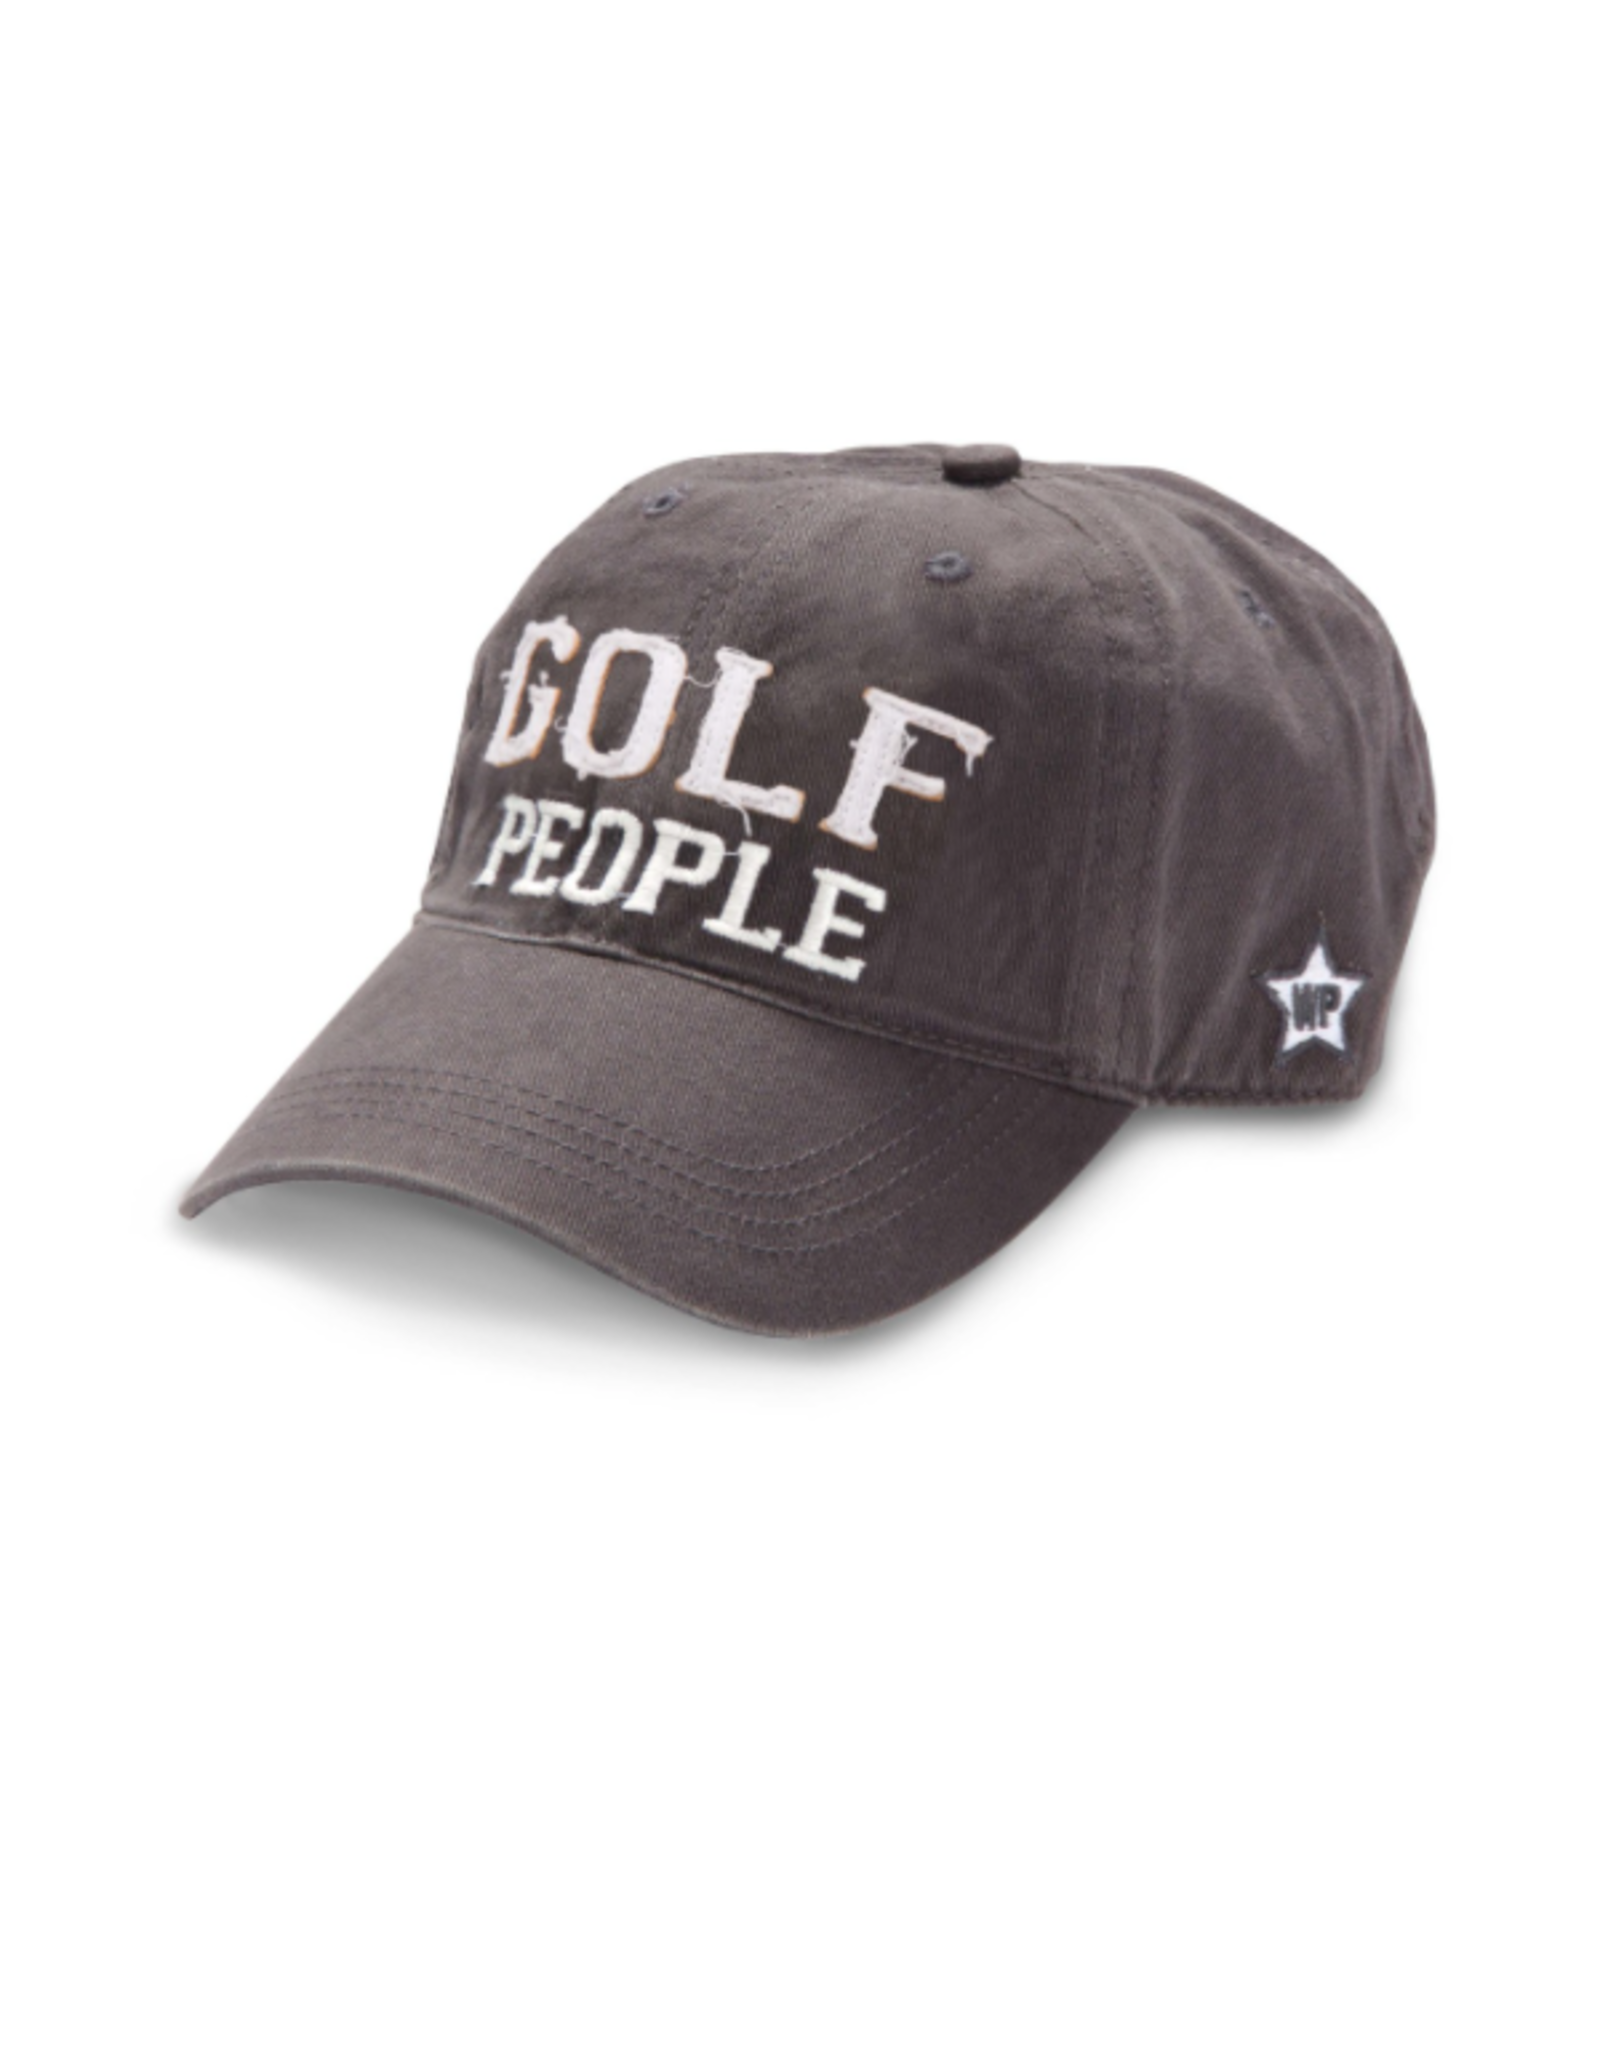 We People Golf People Ball Hat, grey